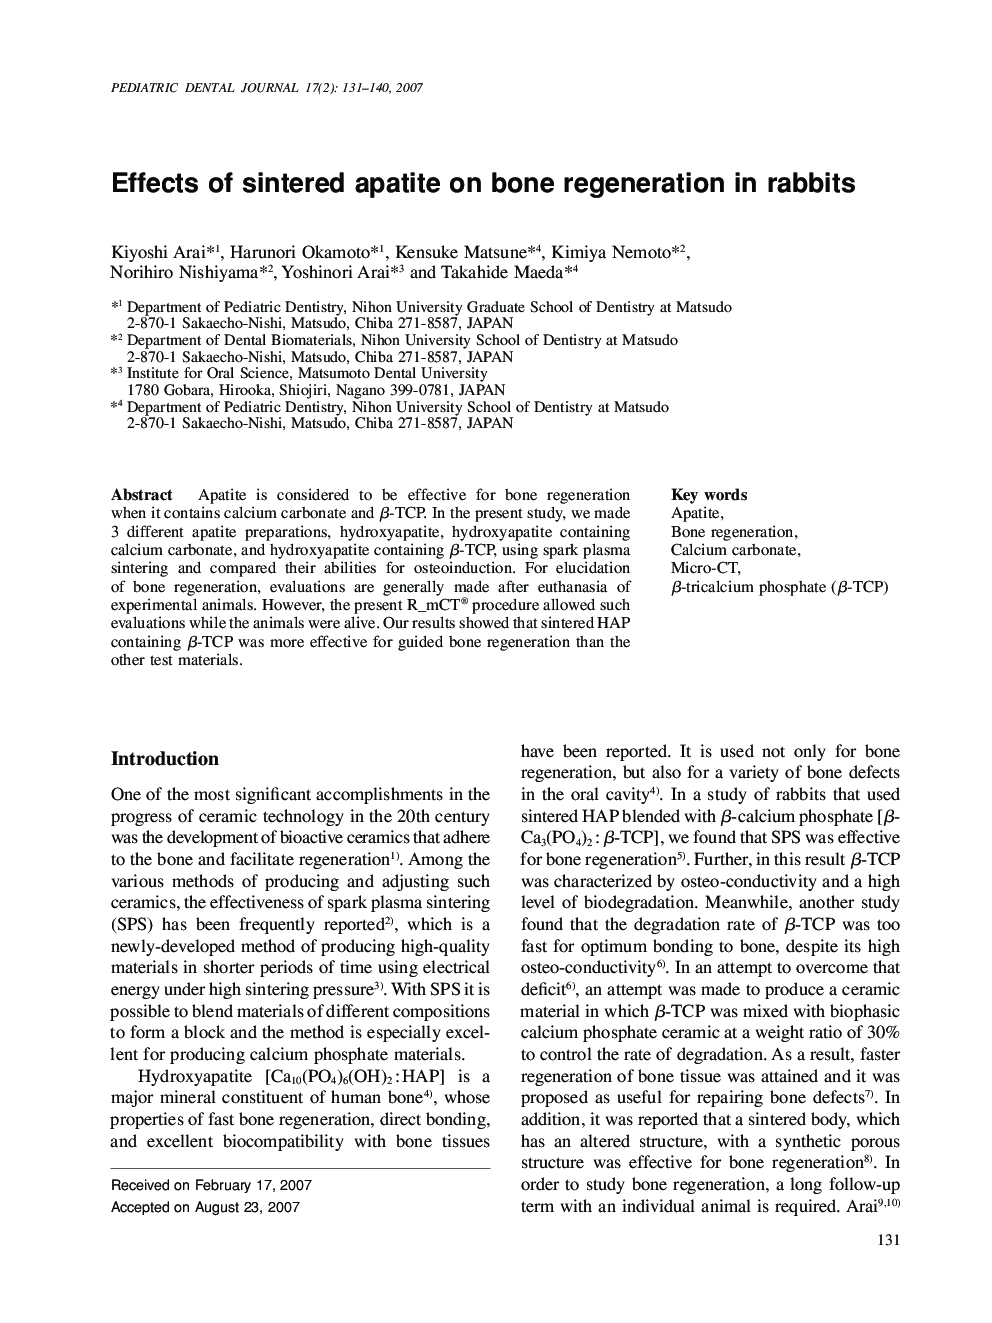 Effects of sintered apatite on bone regeneration in rabbits